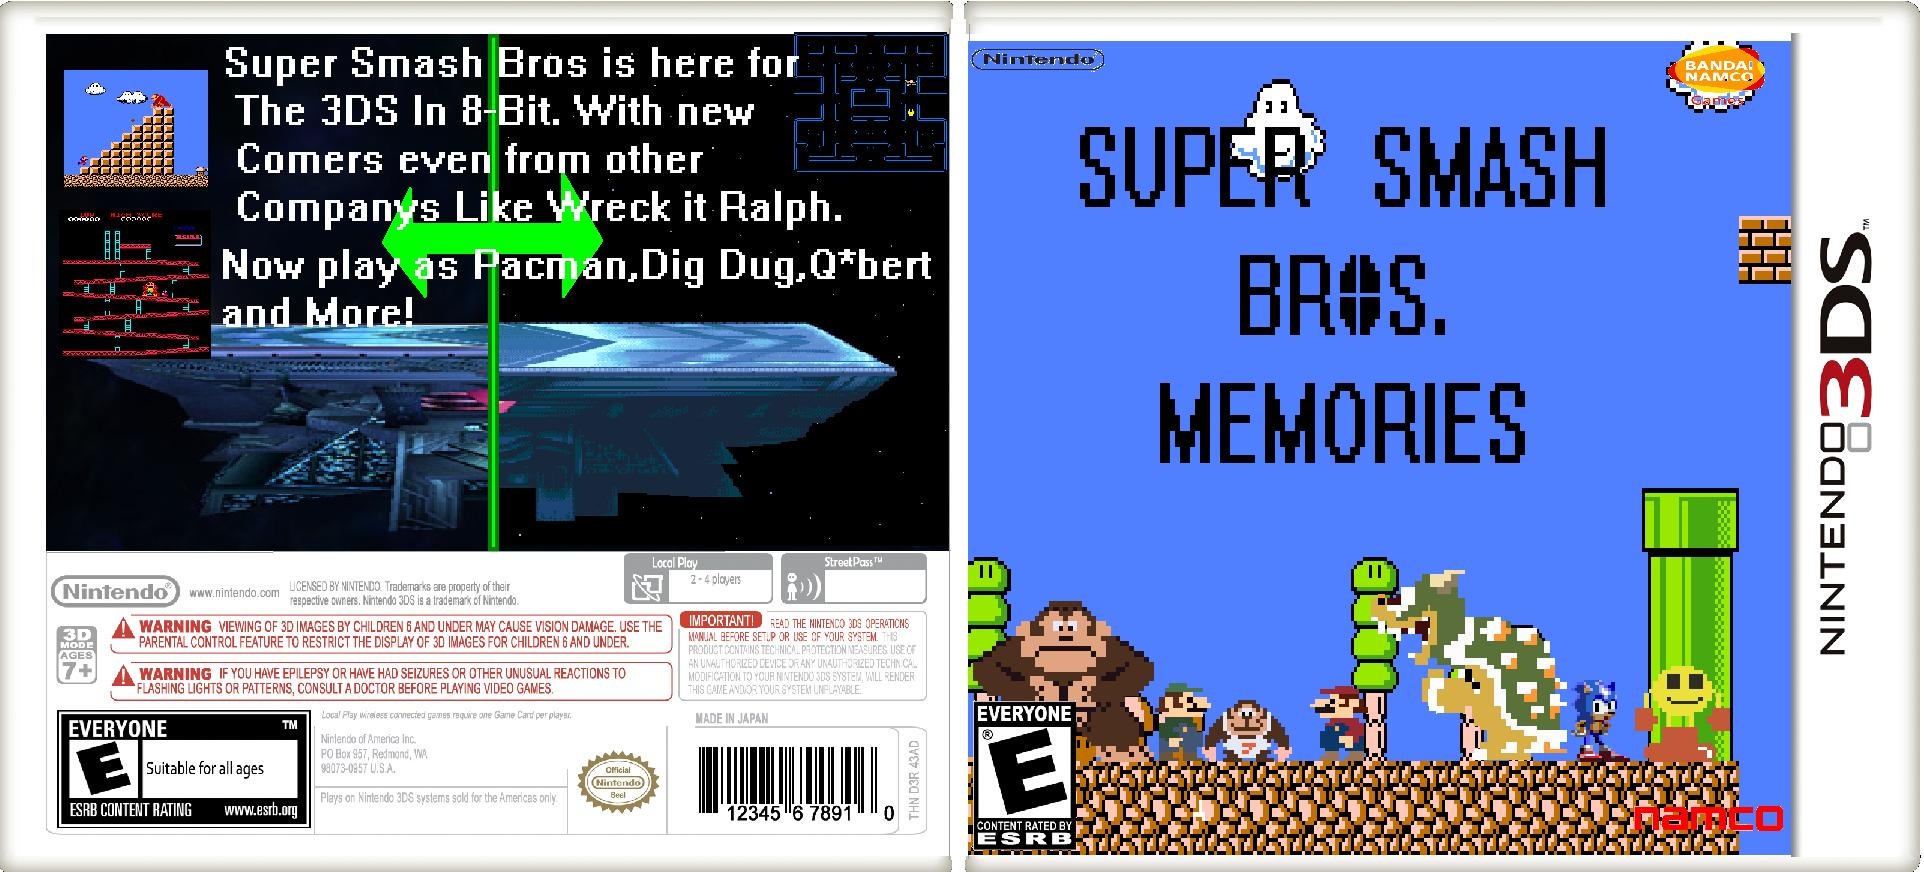 Super Smash Bros. Memories box cover